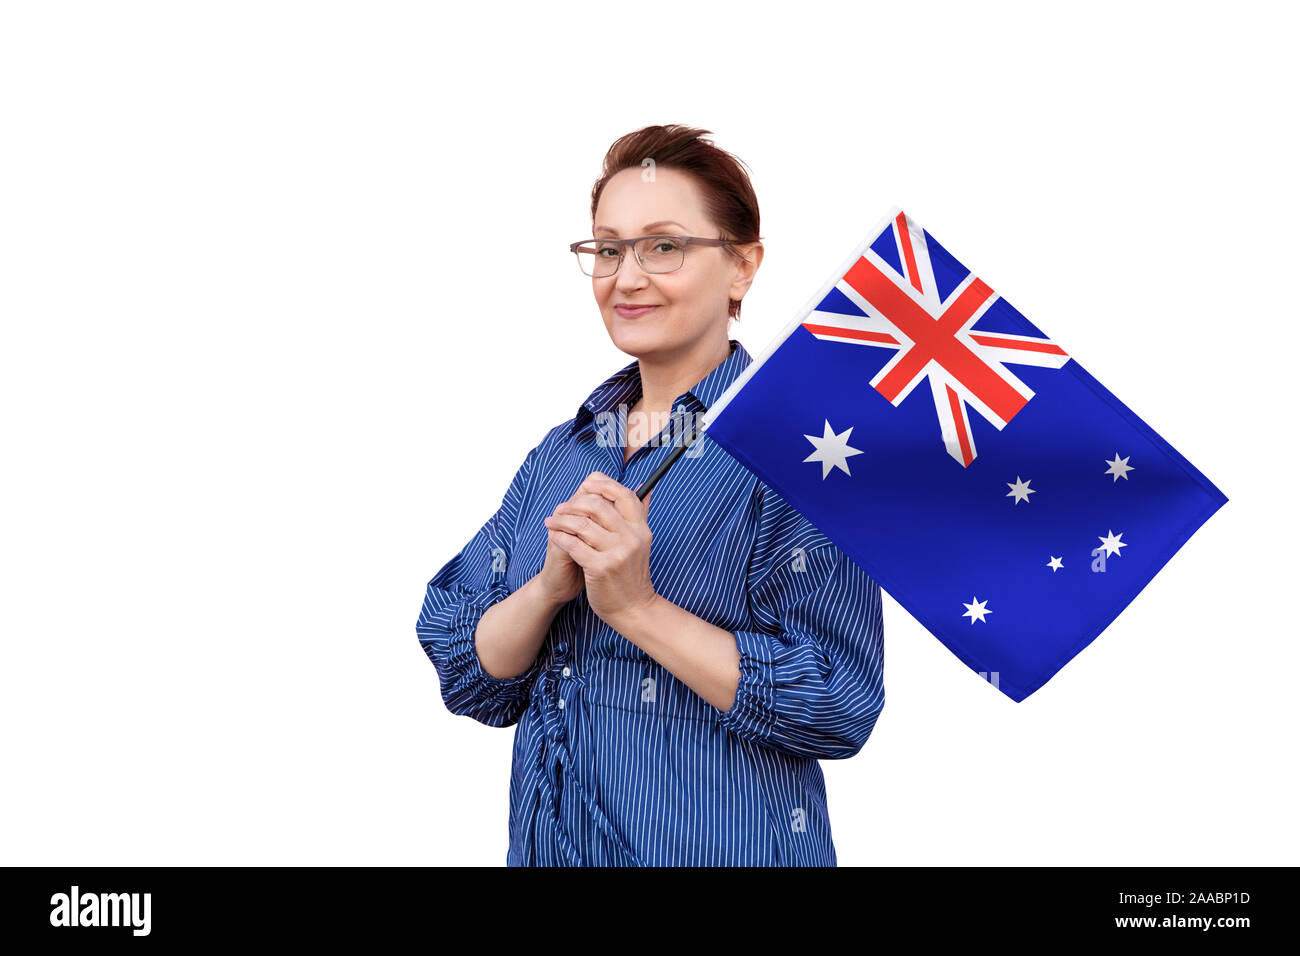 Australia flag. Woman holding Australian flag. Nice portrait of middle aged  lady 40 50 years old holding a large flag isolated on white background  Stock Photo - Alamy